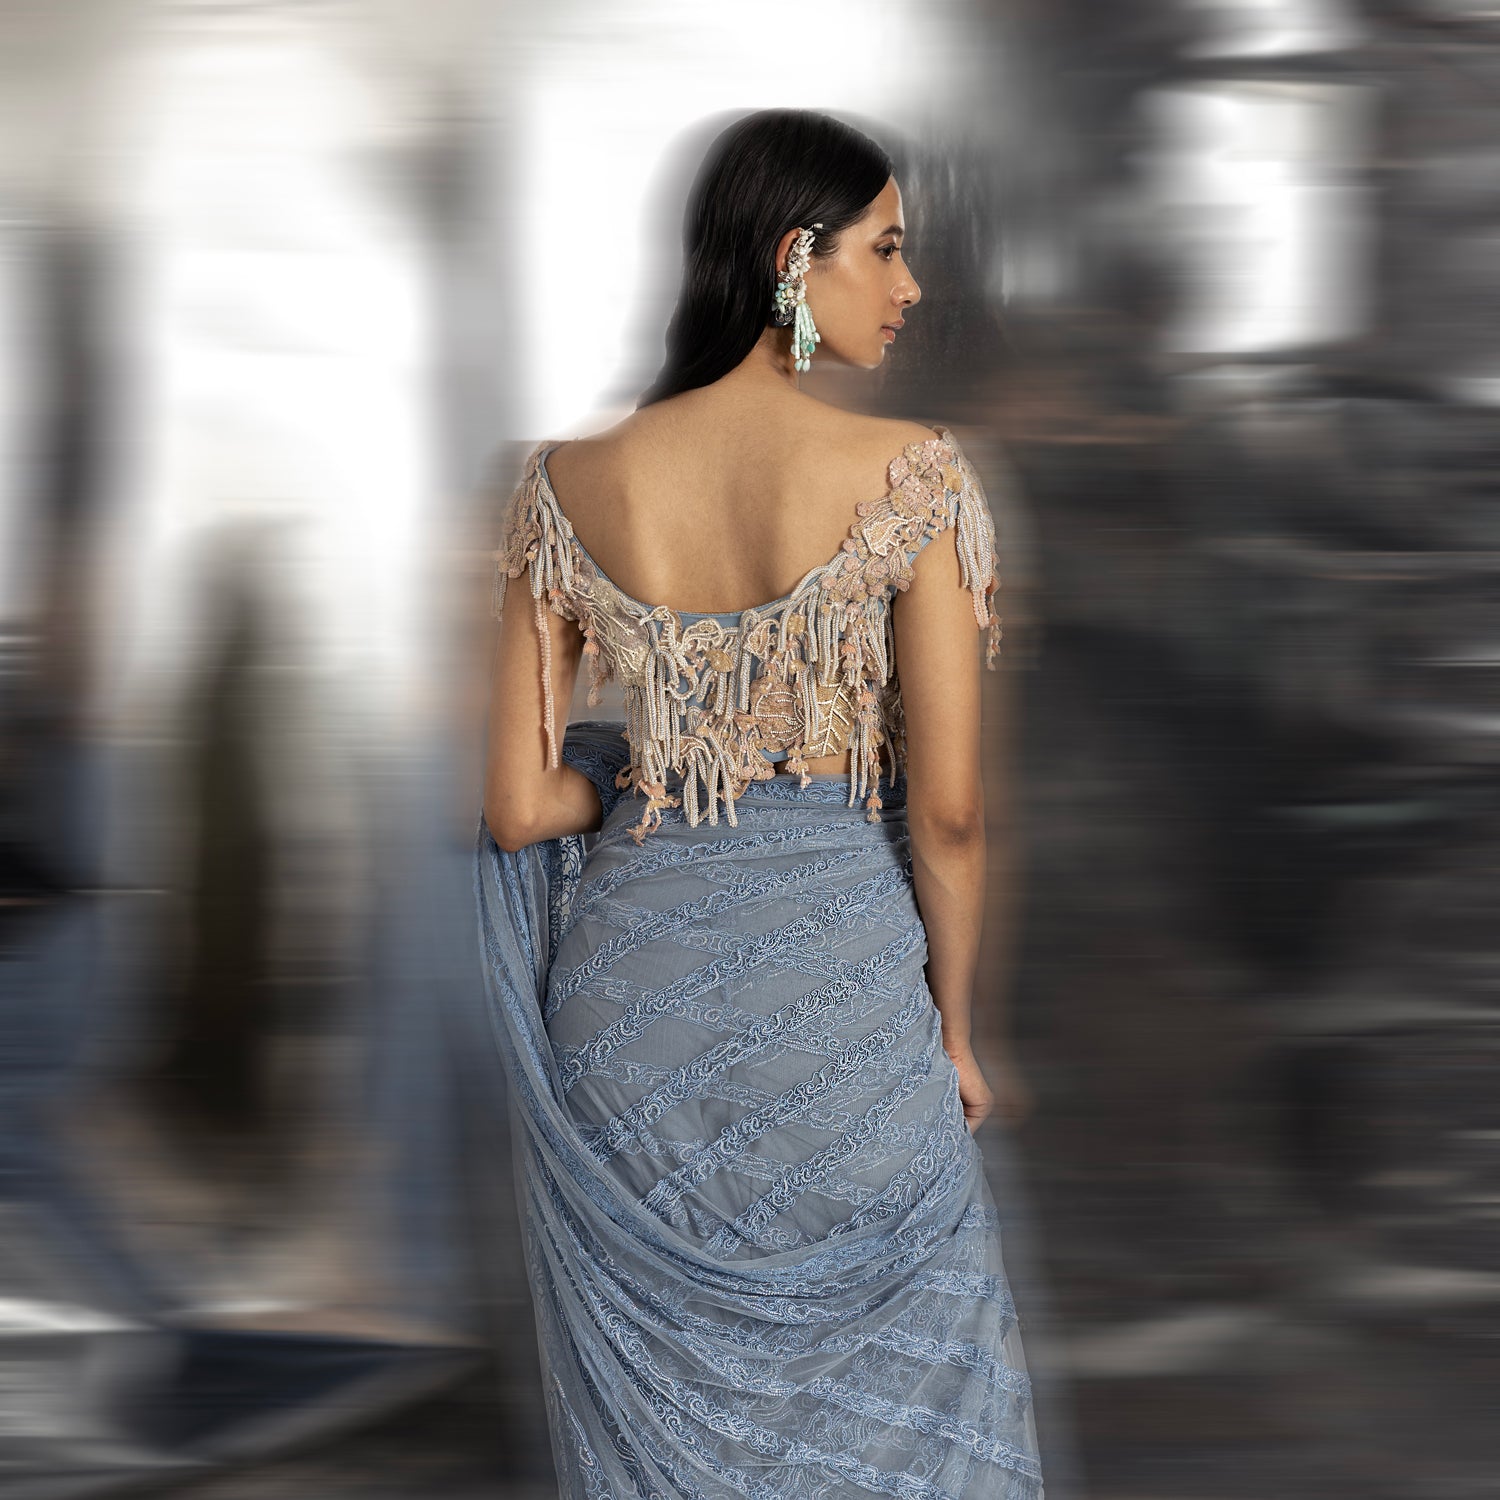 Net saree embellished with fine Resham and beadwork in linear design. The 3D embellished blouse imparts an elegant blend of modernity and tradition.  #abhisheksharma #fashiondesignerabhisheksharma #reef #redcarpet #shortdress #abhishekstudio 